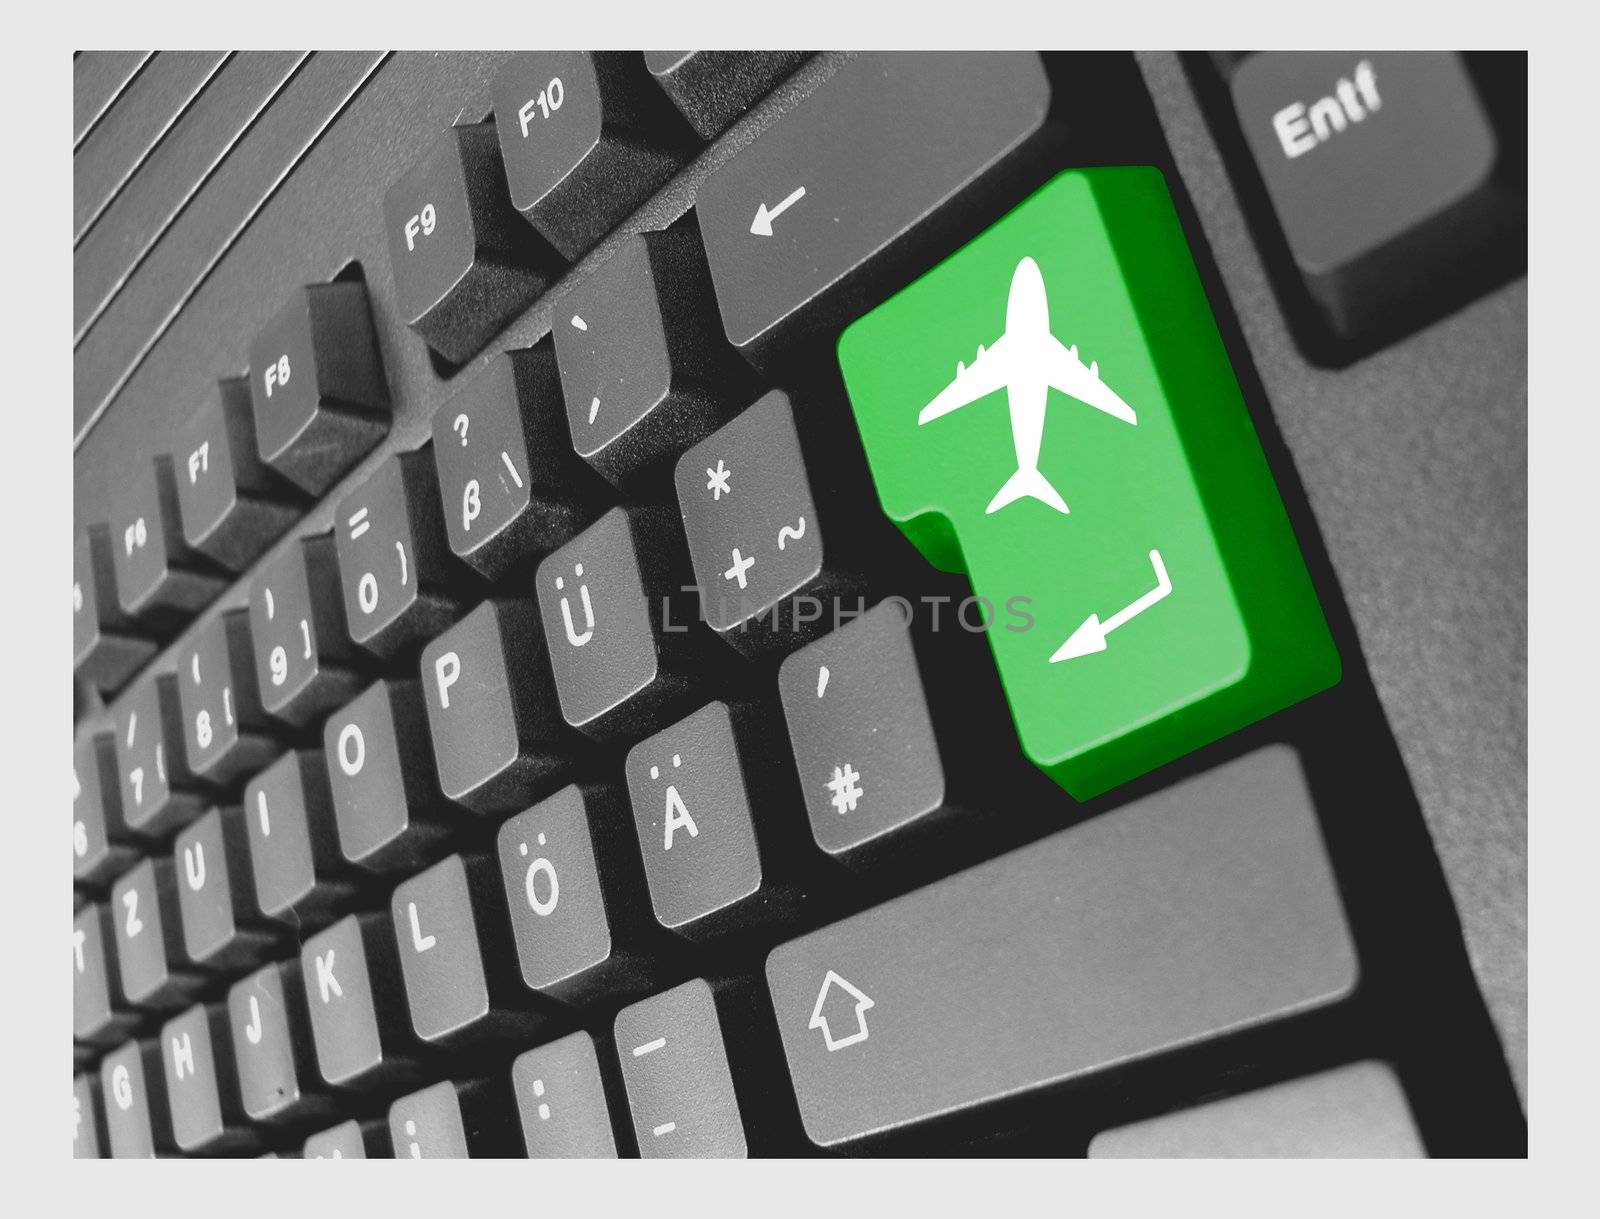 keyboard with green key flying